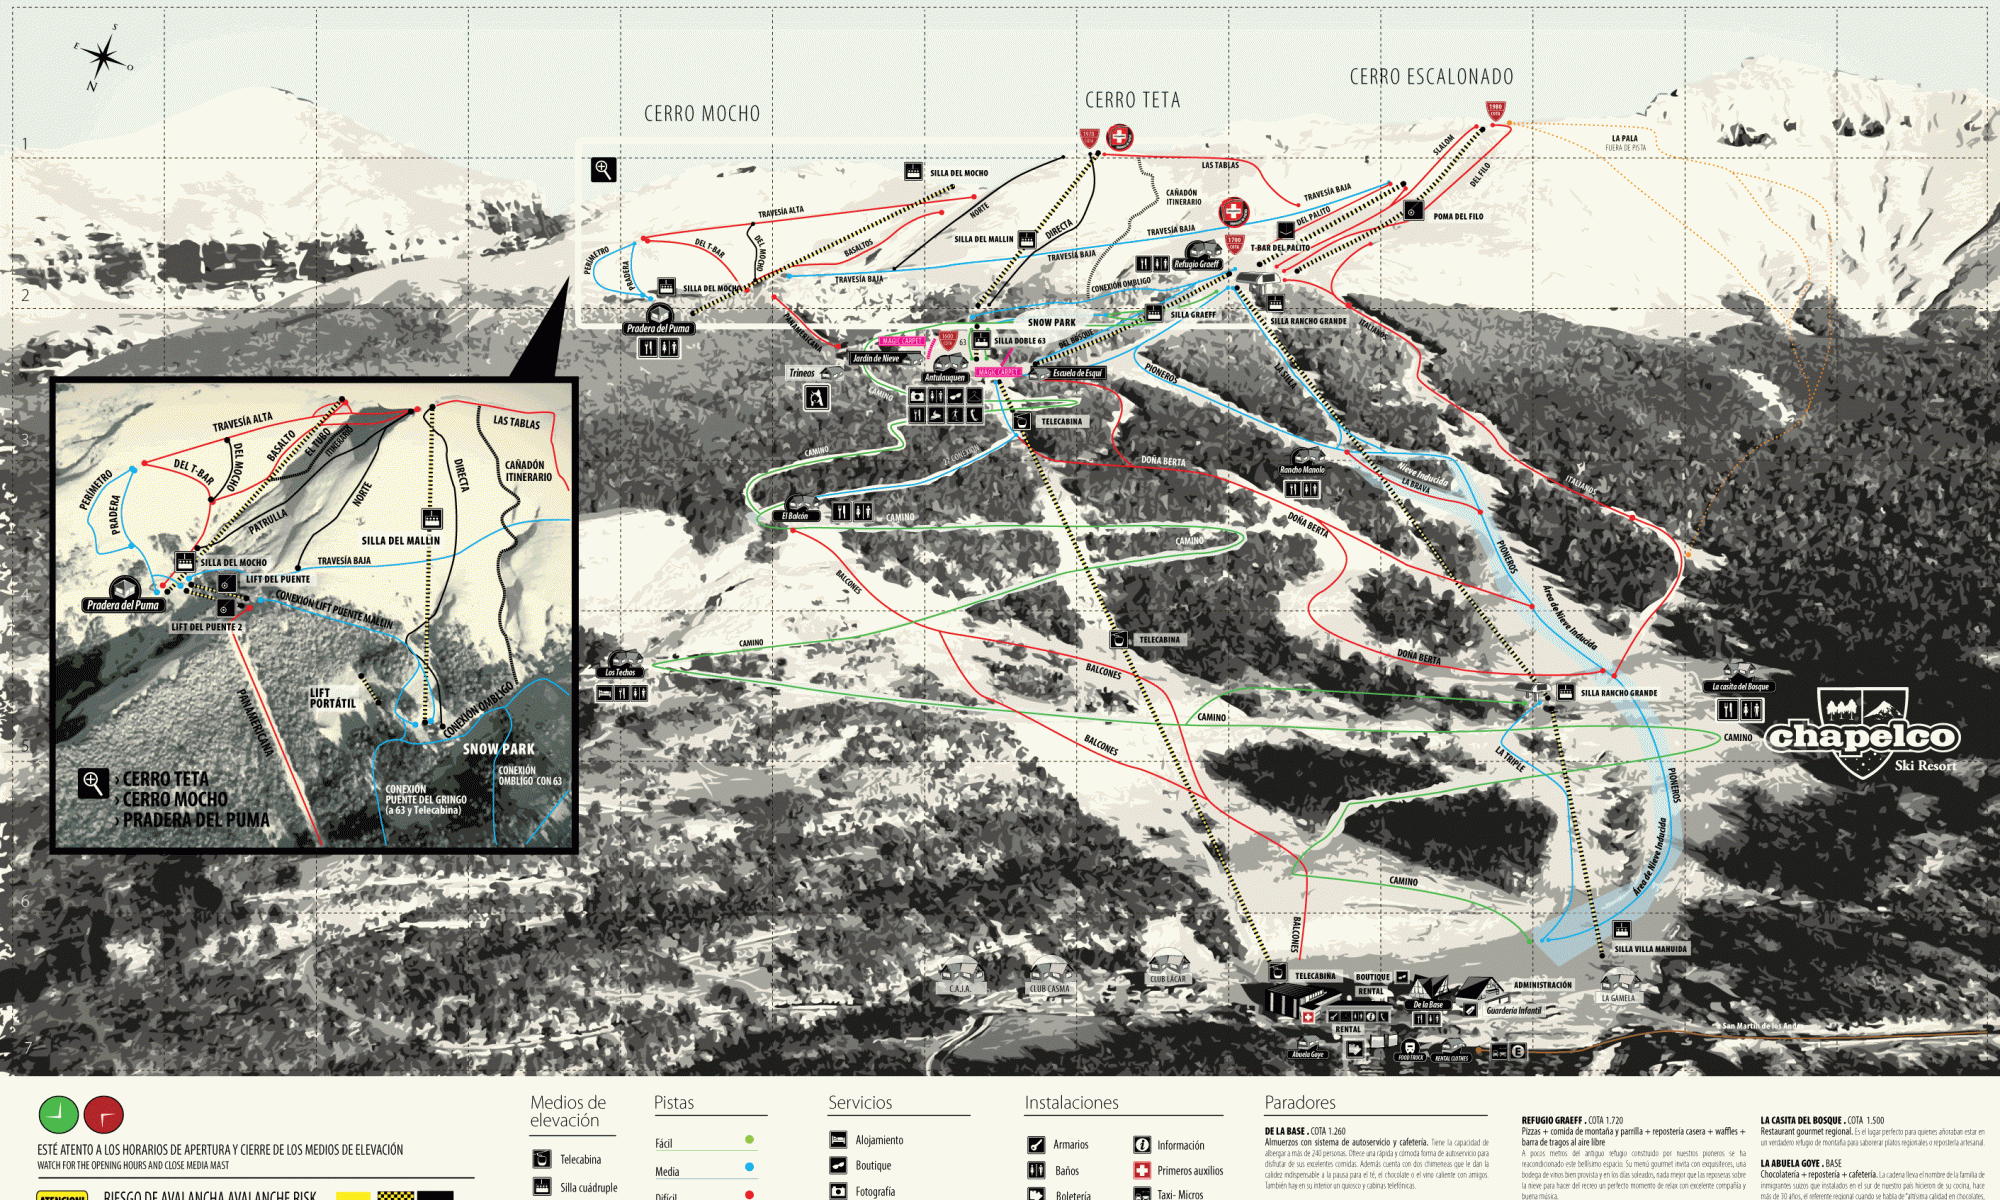 Chapelco ski map. Today opens Chapelco #AbreChapelco.